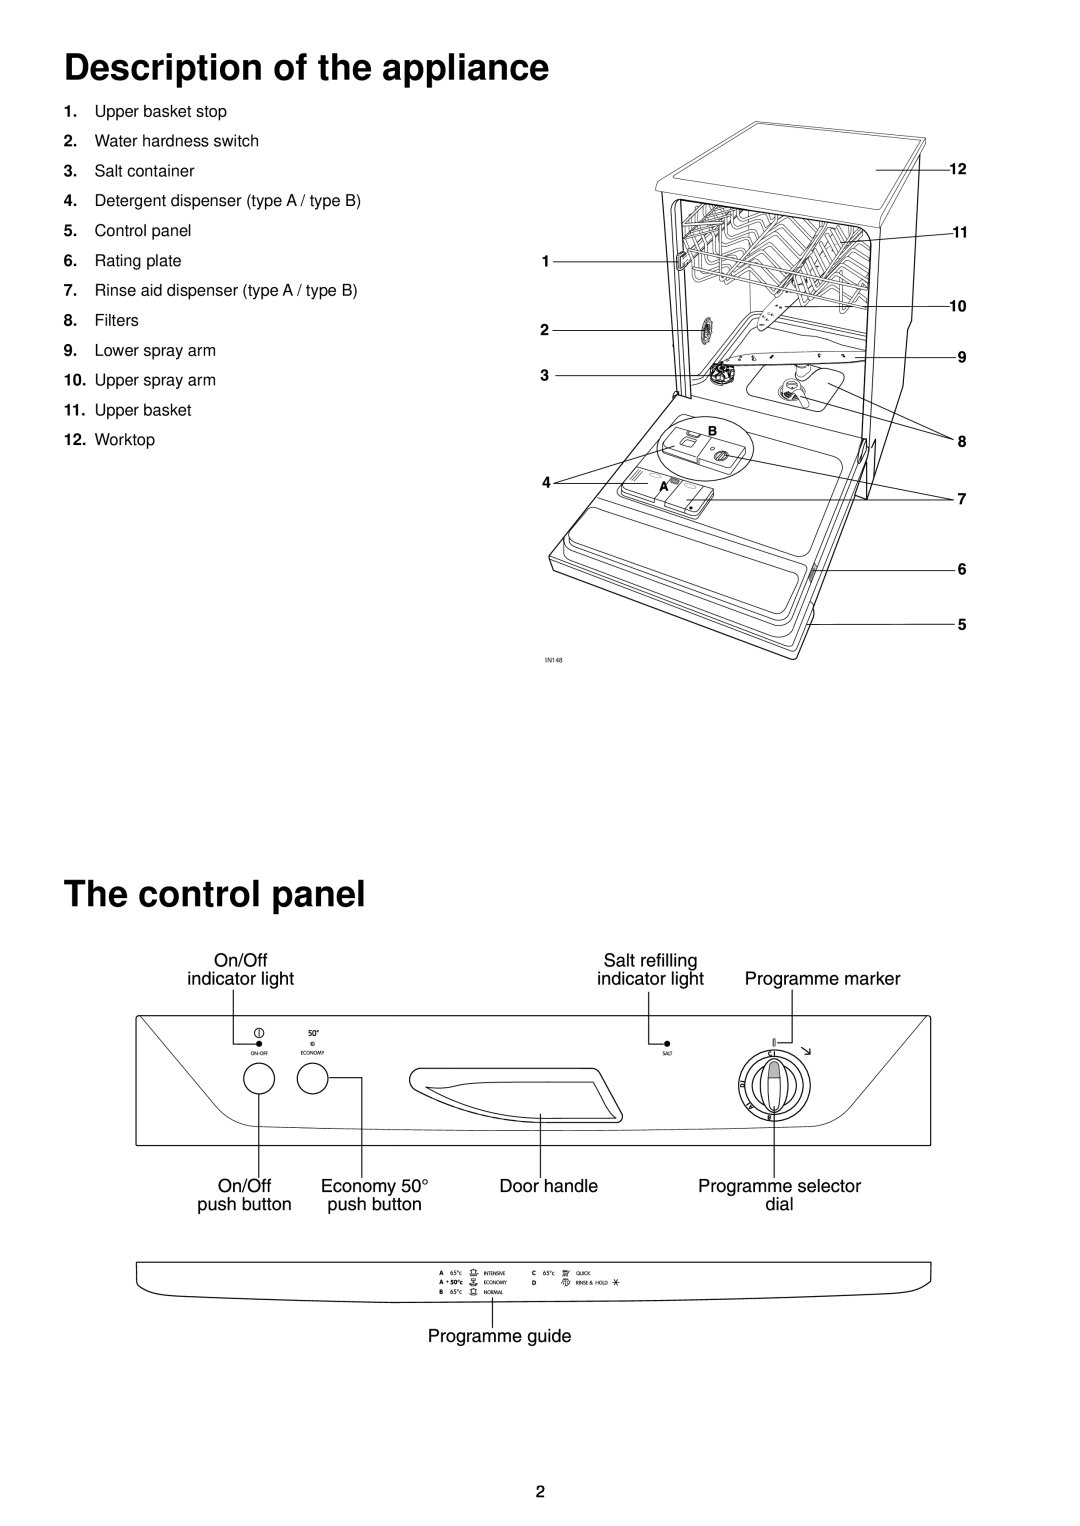 Zanussi DA 6153 Description of the appliance, The control panel, Detergent dispenser type A / type B 5. Control panel 